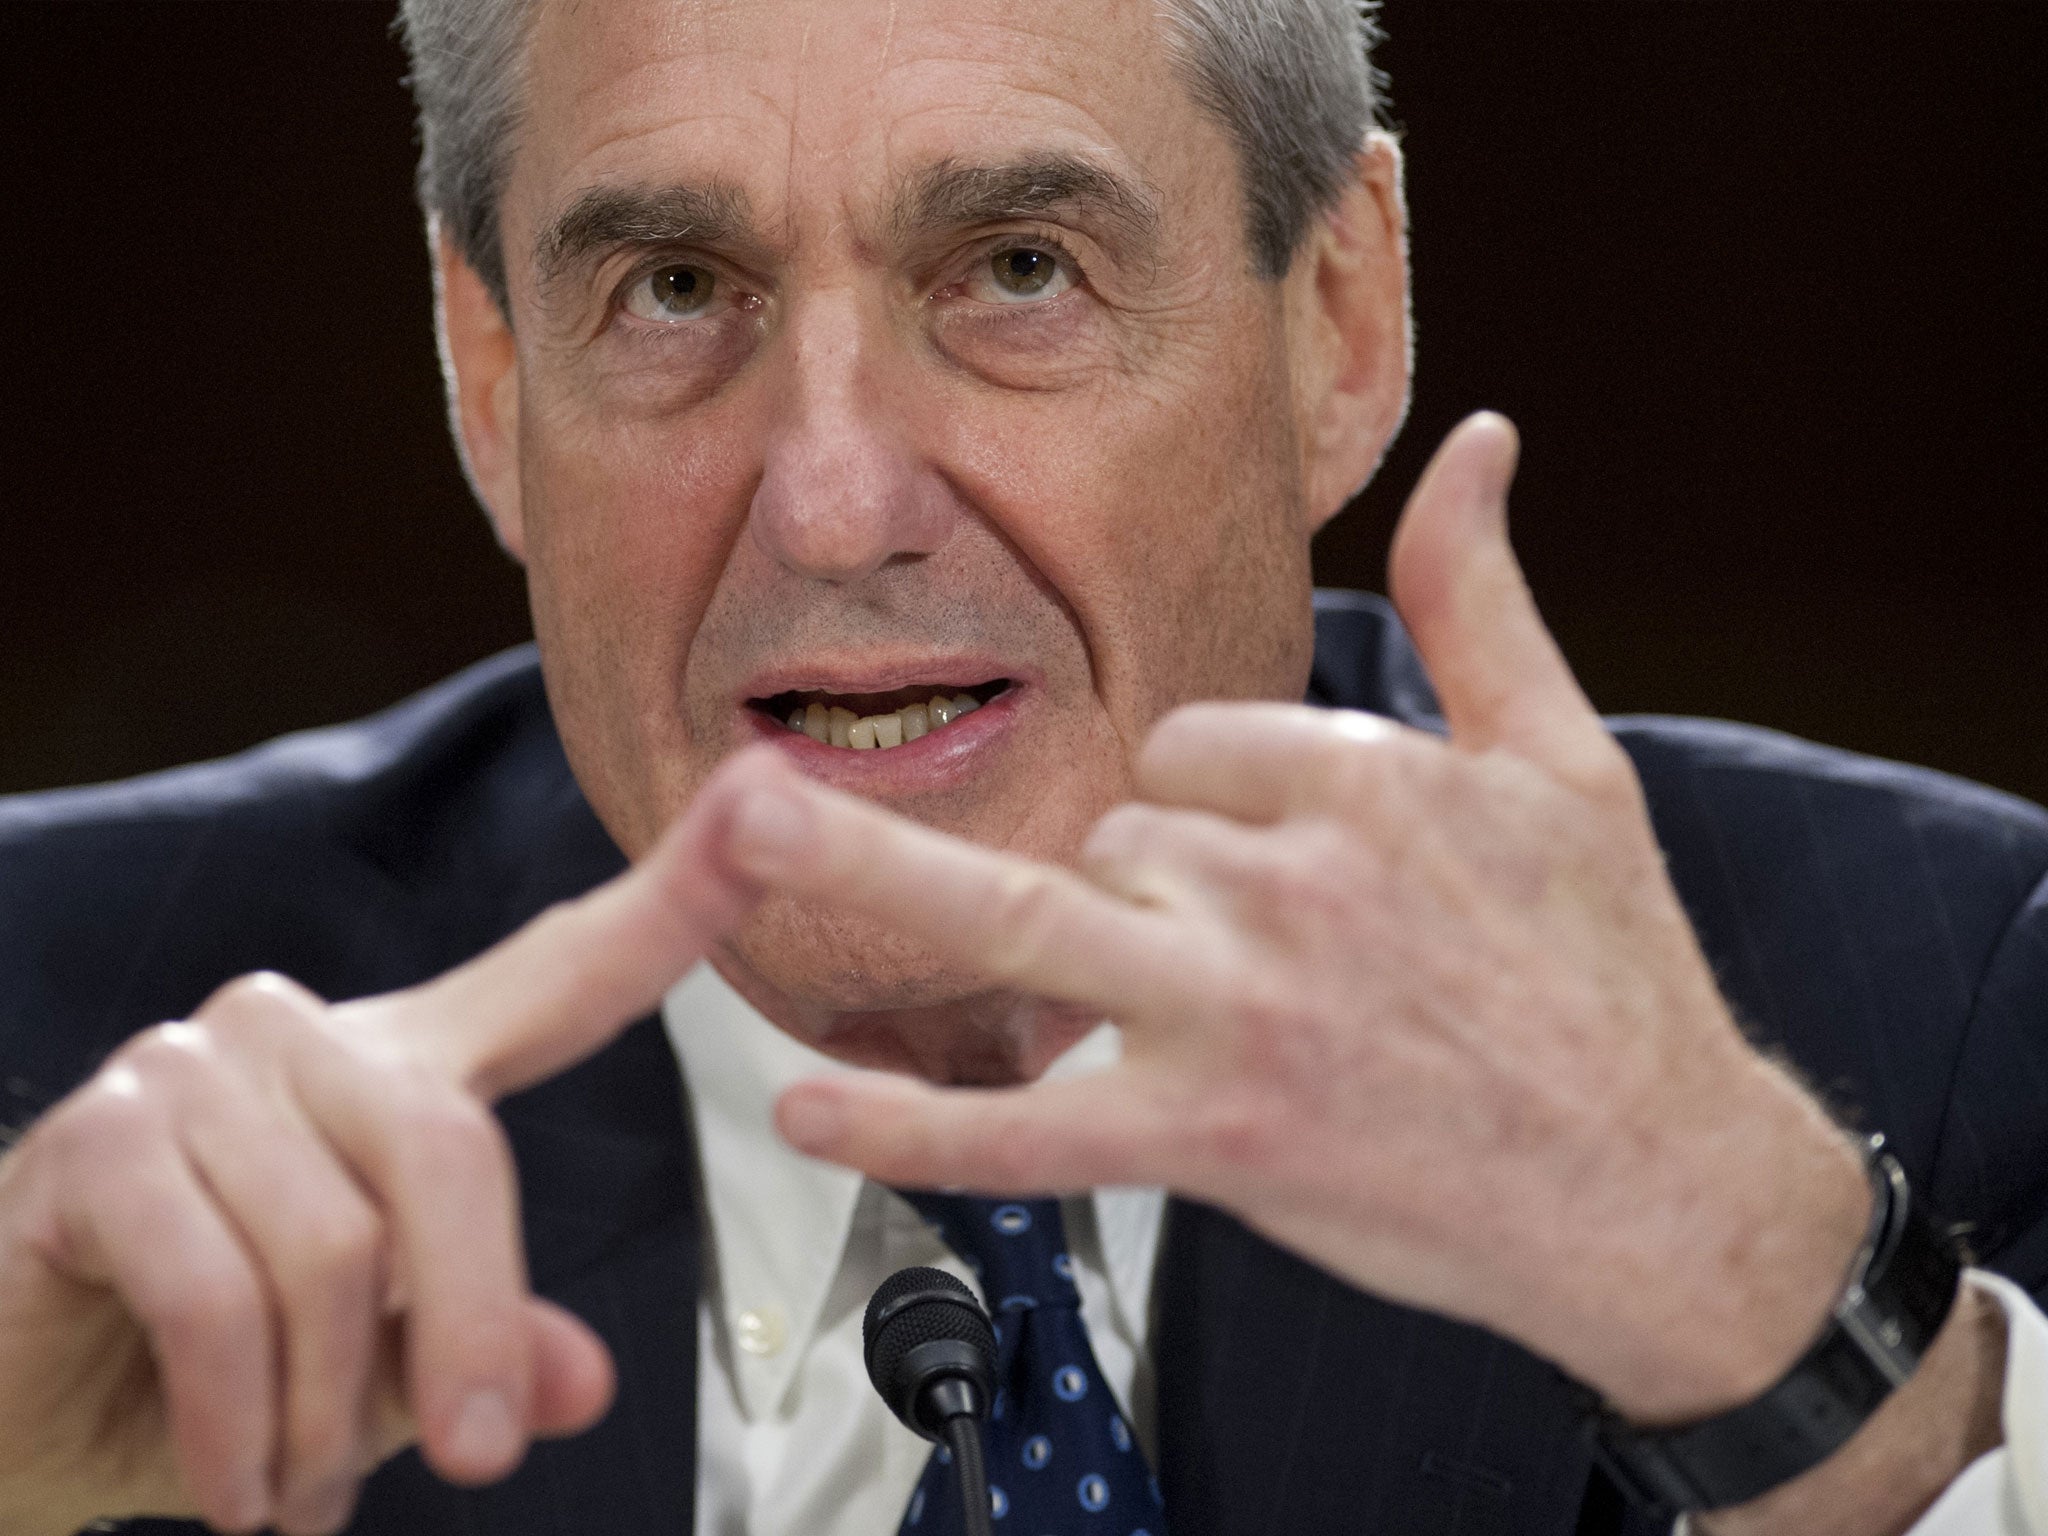 Mueller is leading the Russian probe